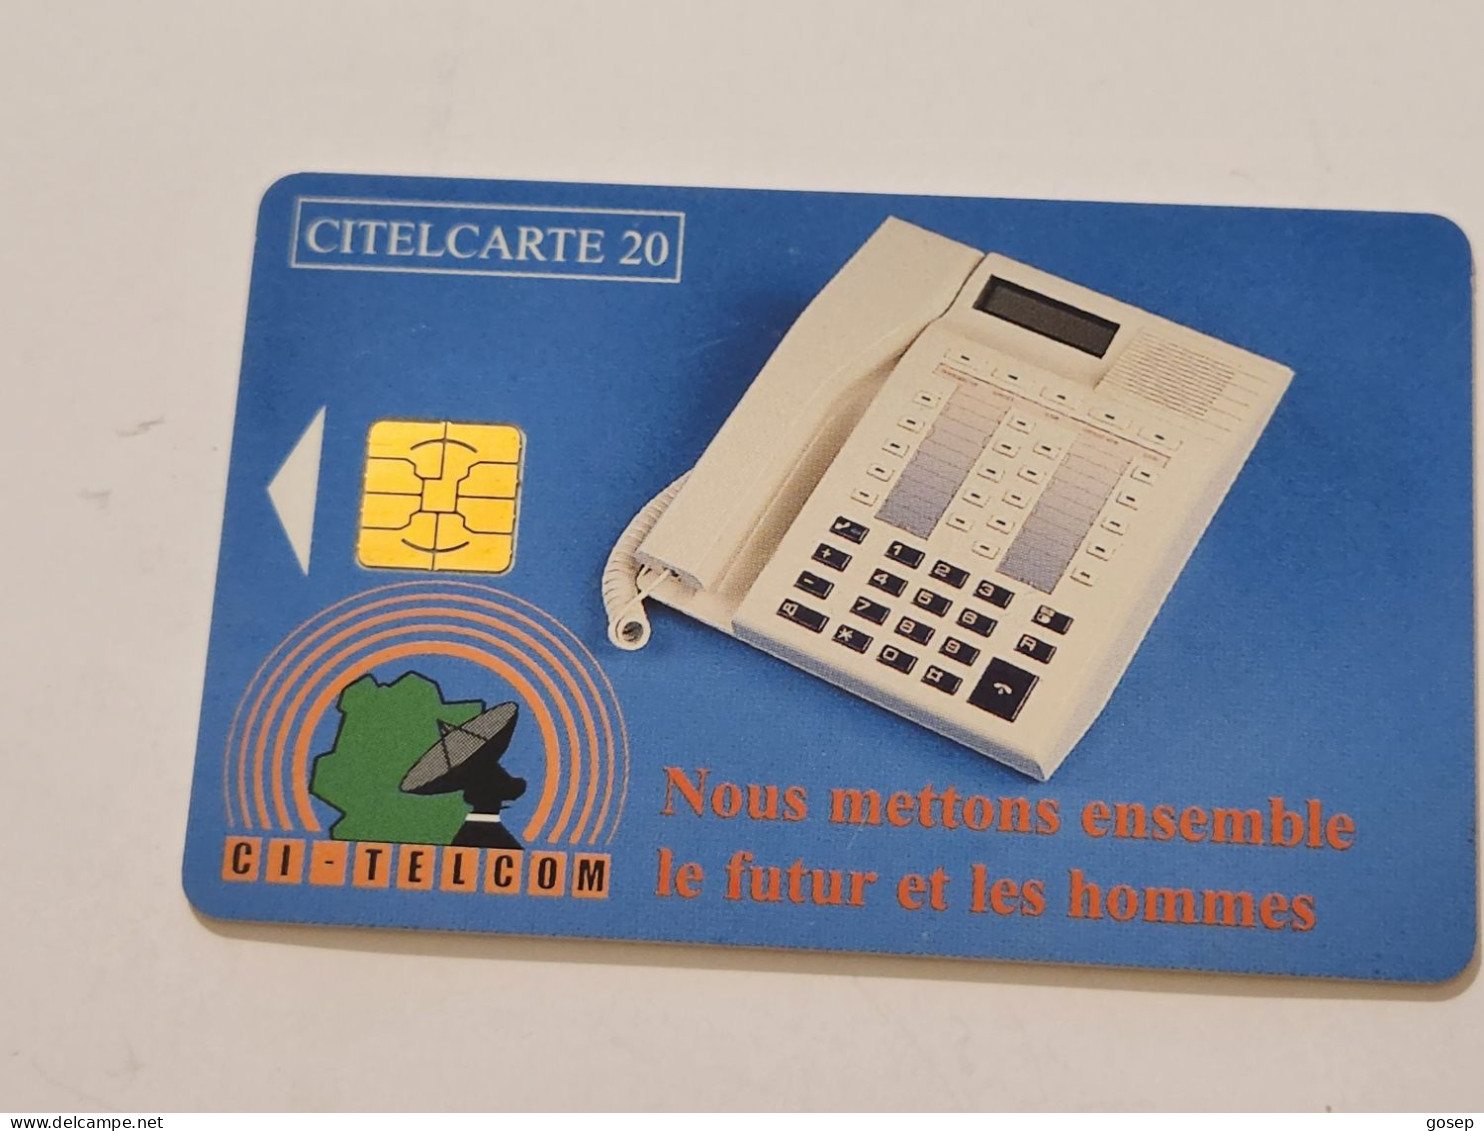 Ivory Coast-CI-CIT-0019)-telephone Nous-(33)-(20units)-(000188951)-(tirage-150.000)-used Card+1card Prepiad Free - Ivory Coast